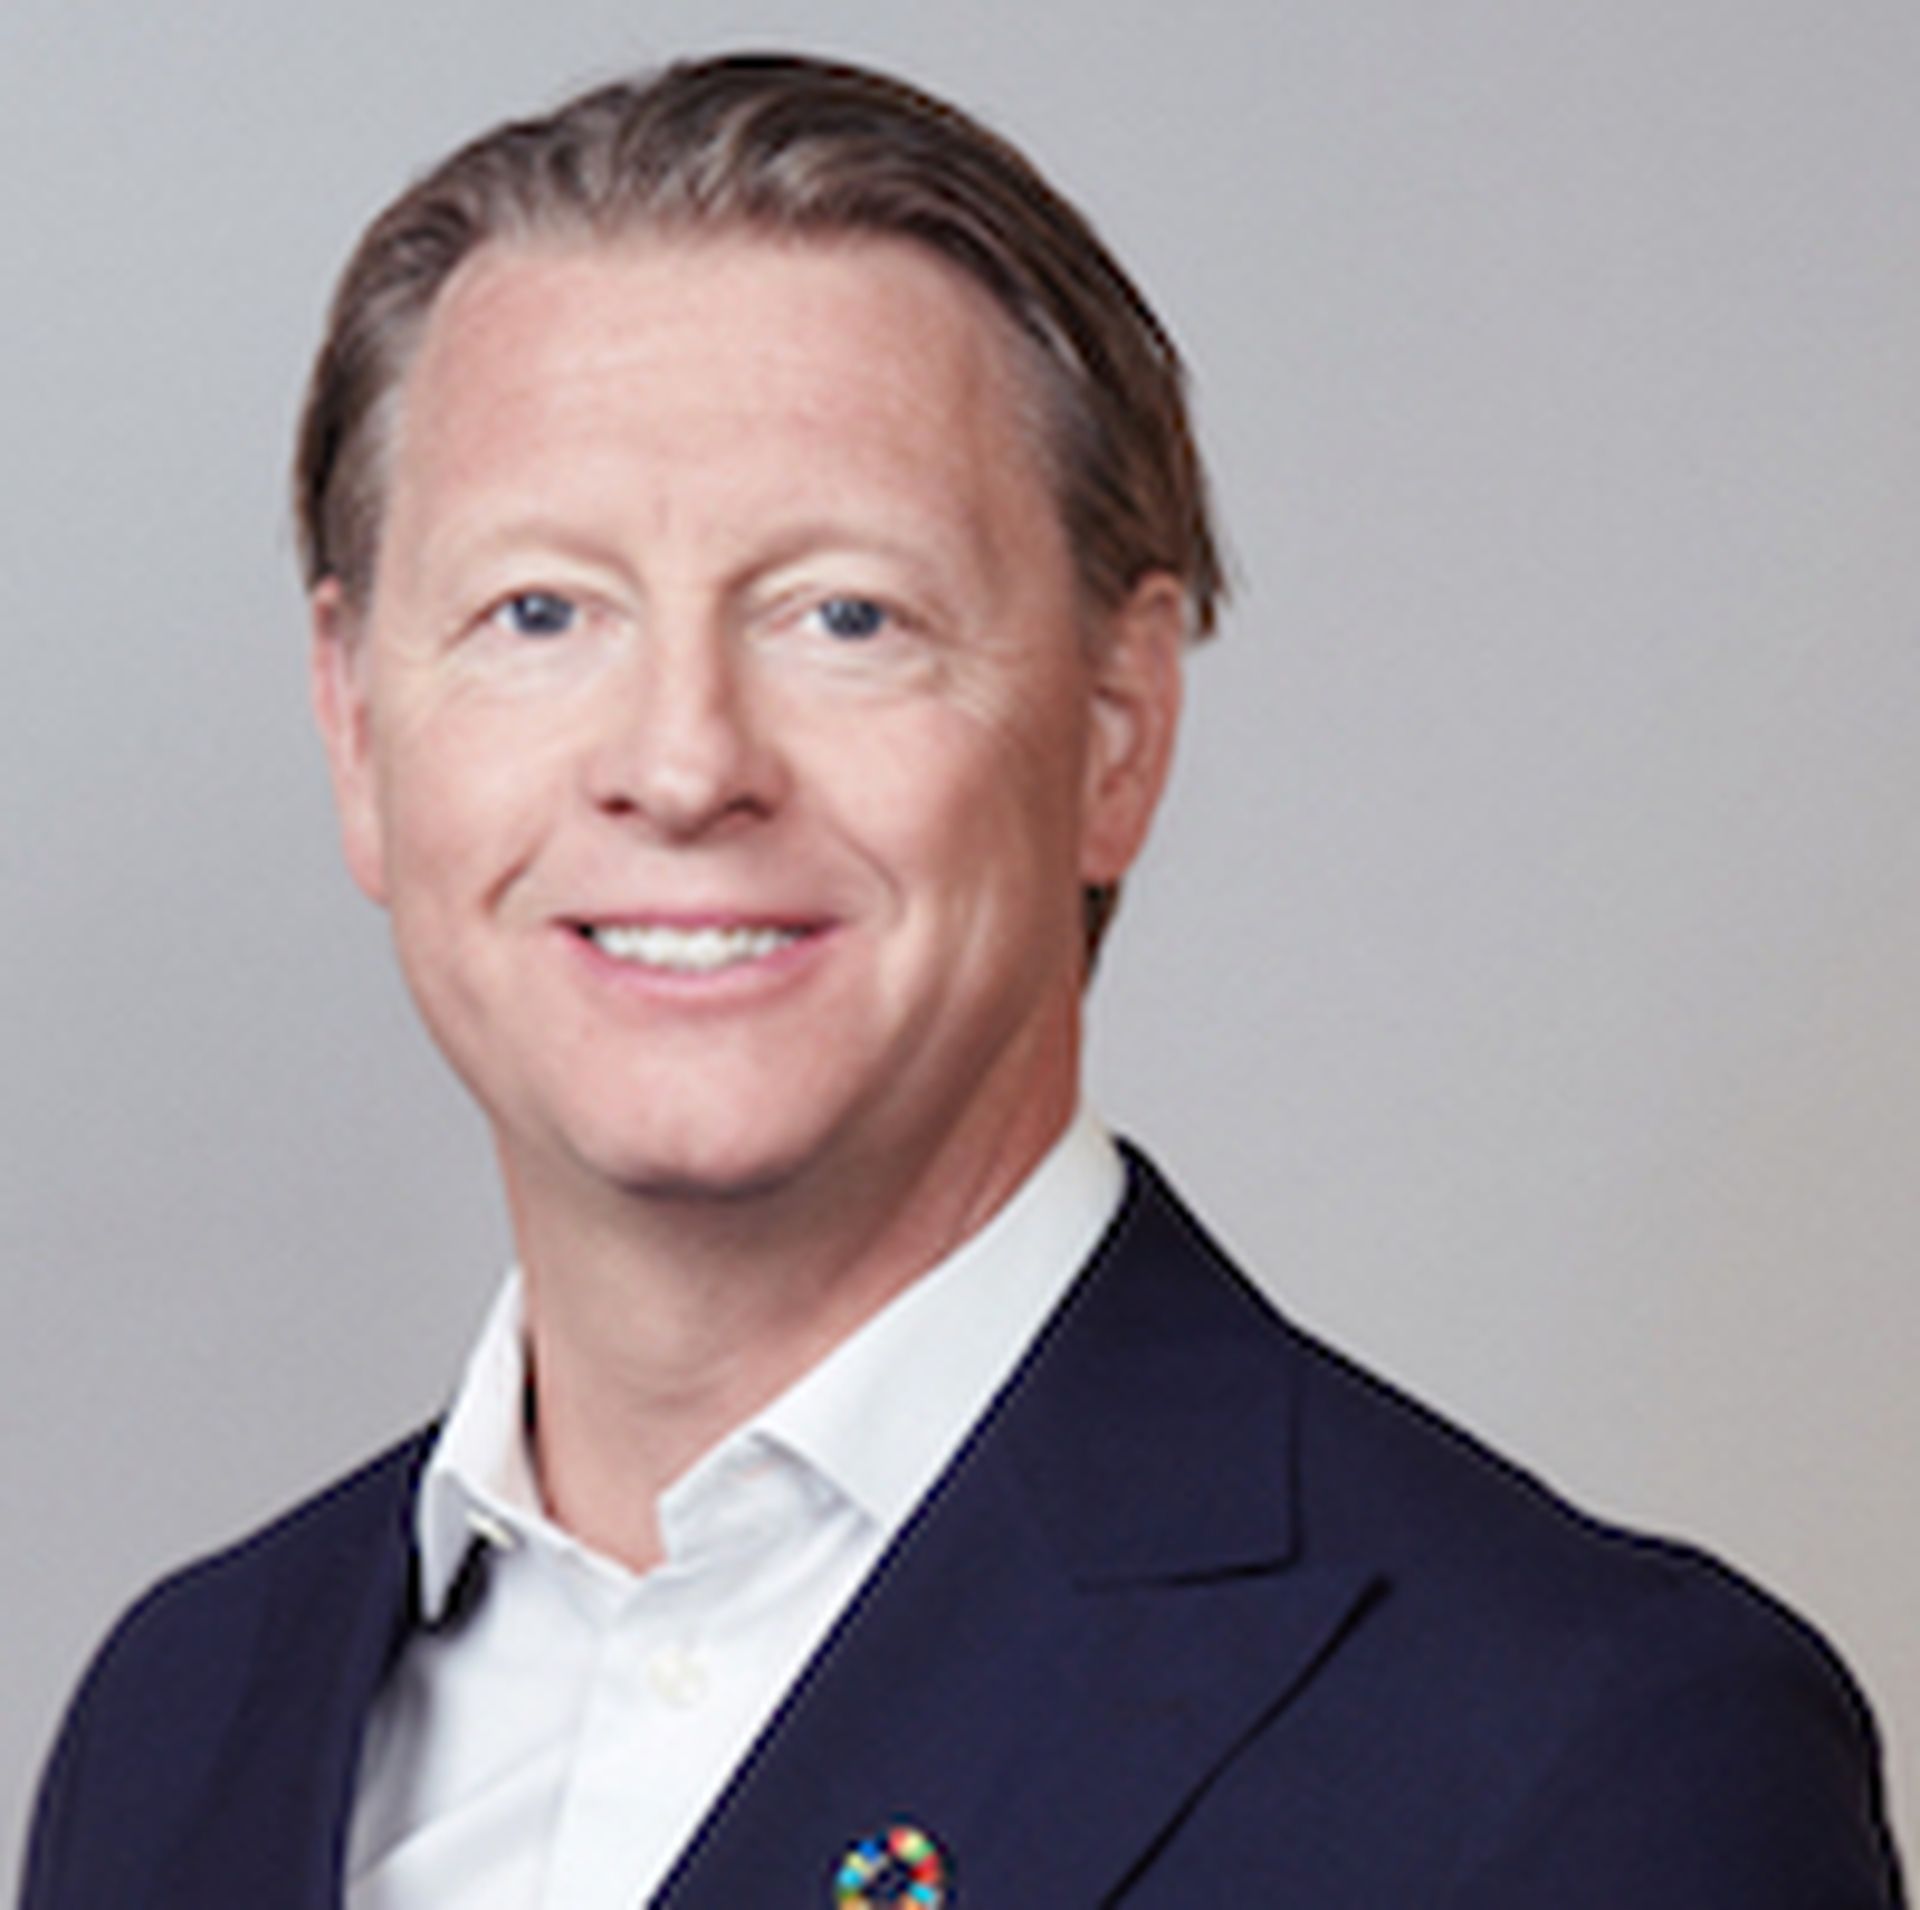 Hans Vestberg, chairman and CEO, Verizon